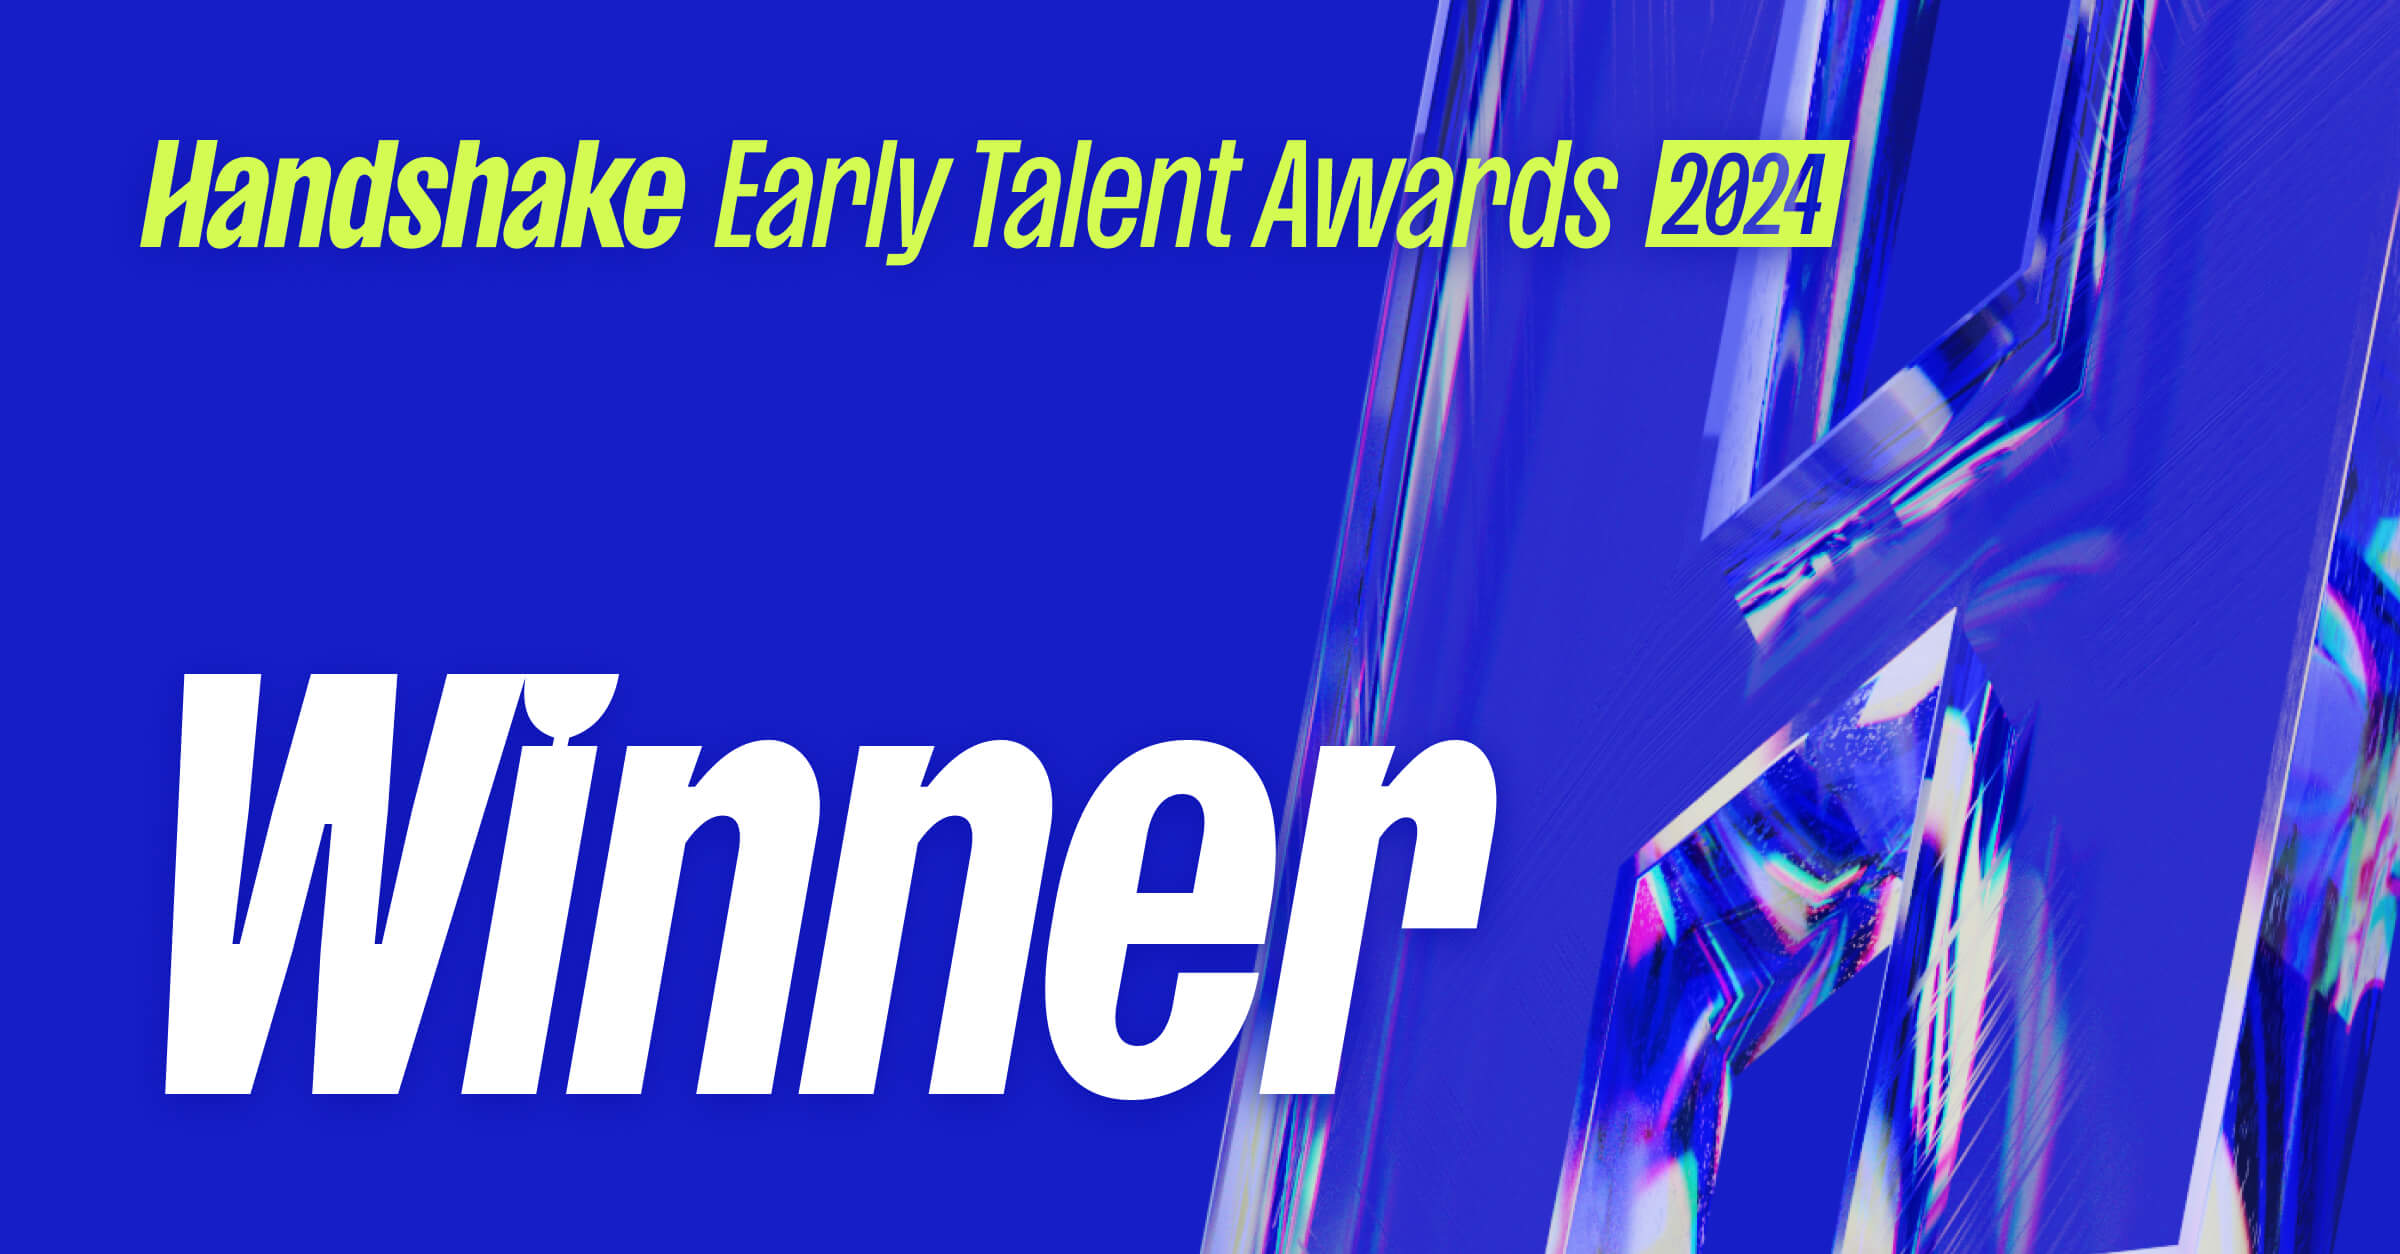 Handshake Early Talent Awards 2024 Winner